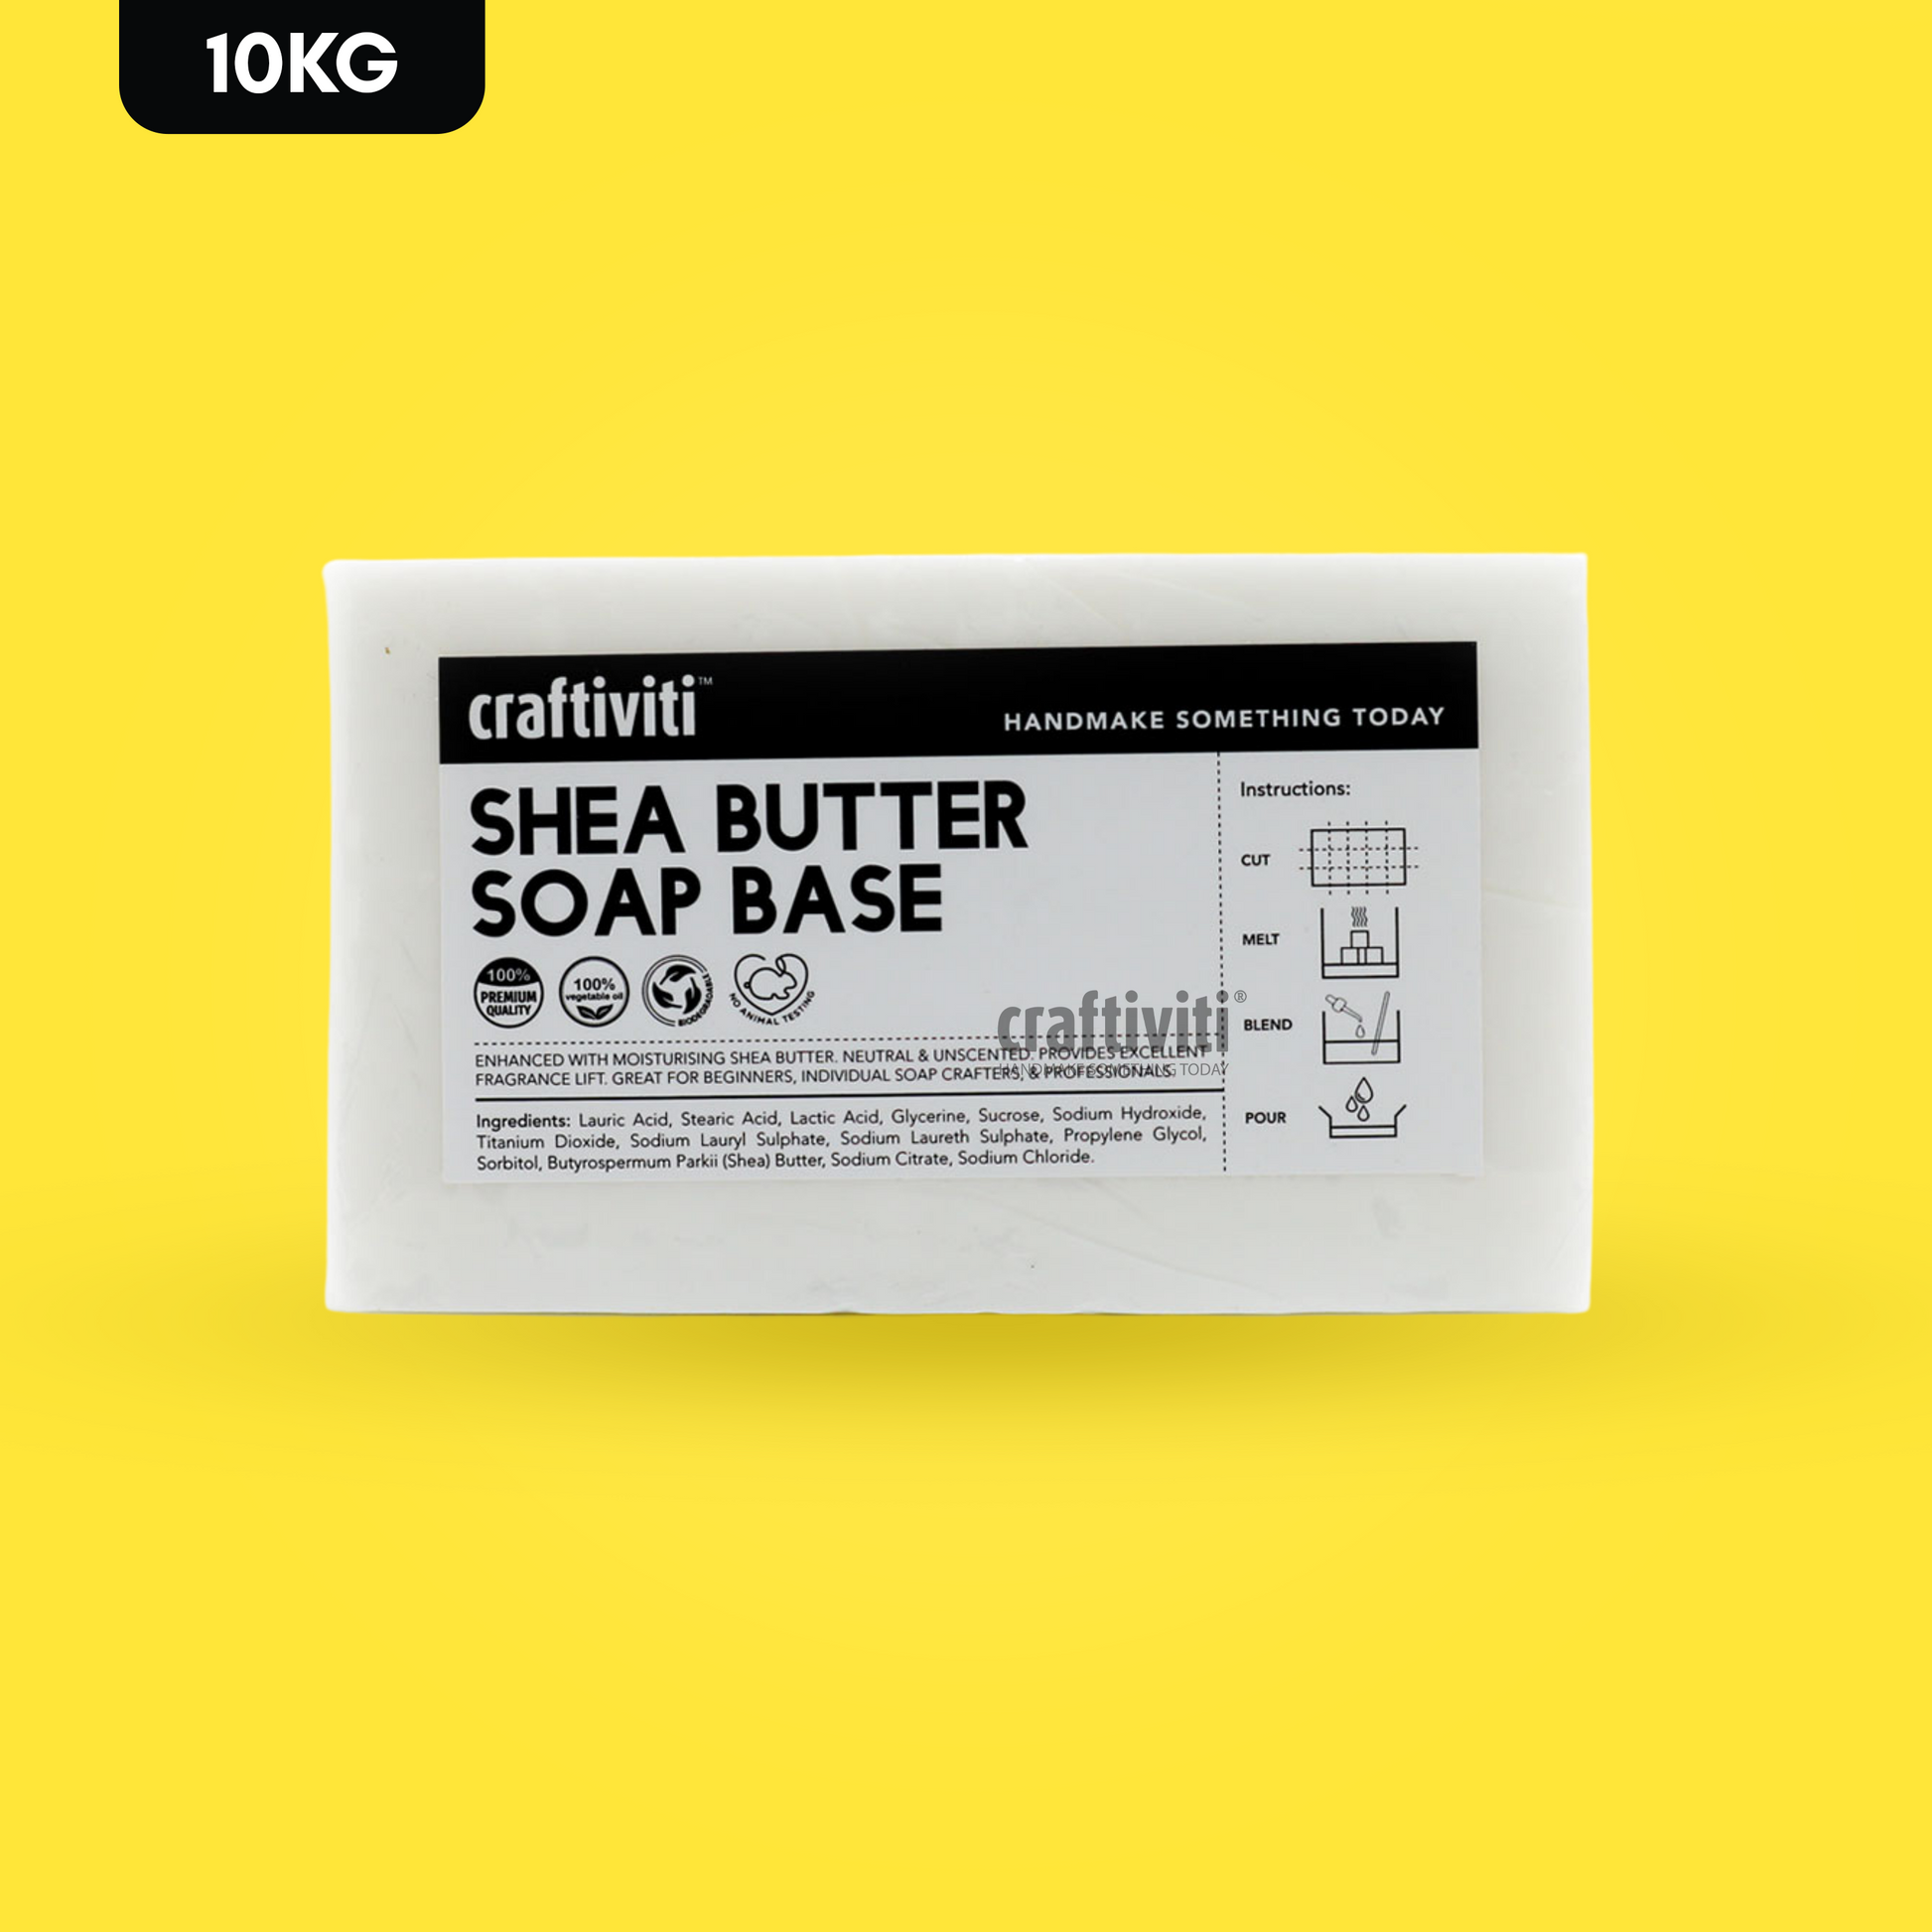 [BUNDLE] Shea Butter Soap Base - 10kg